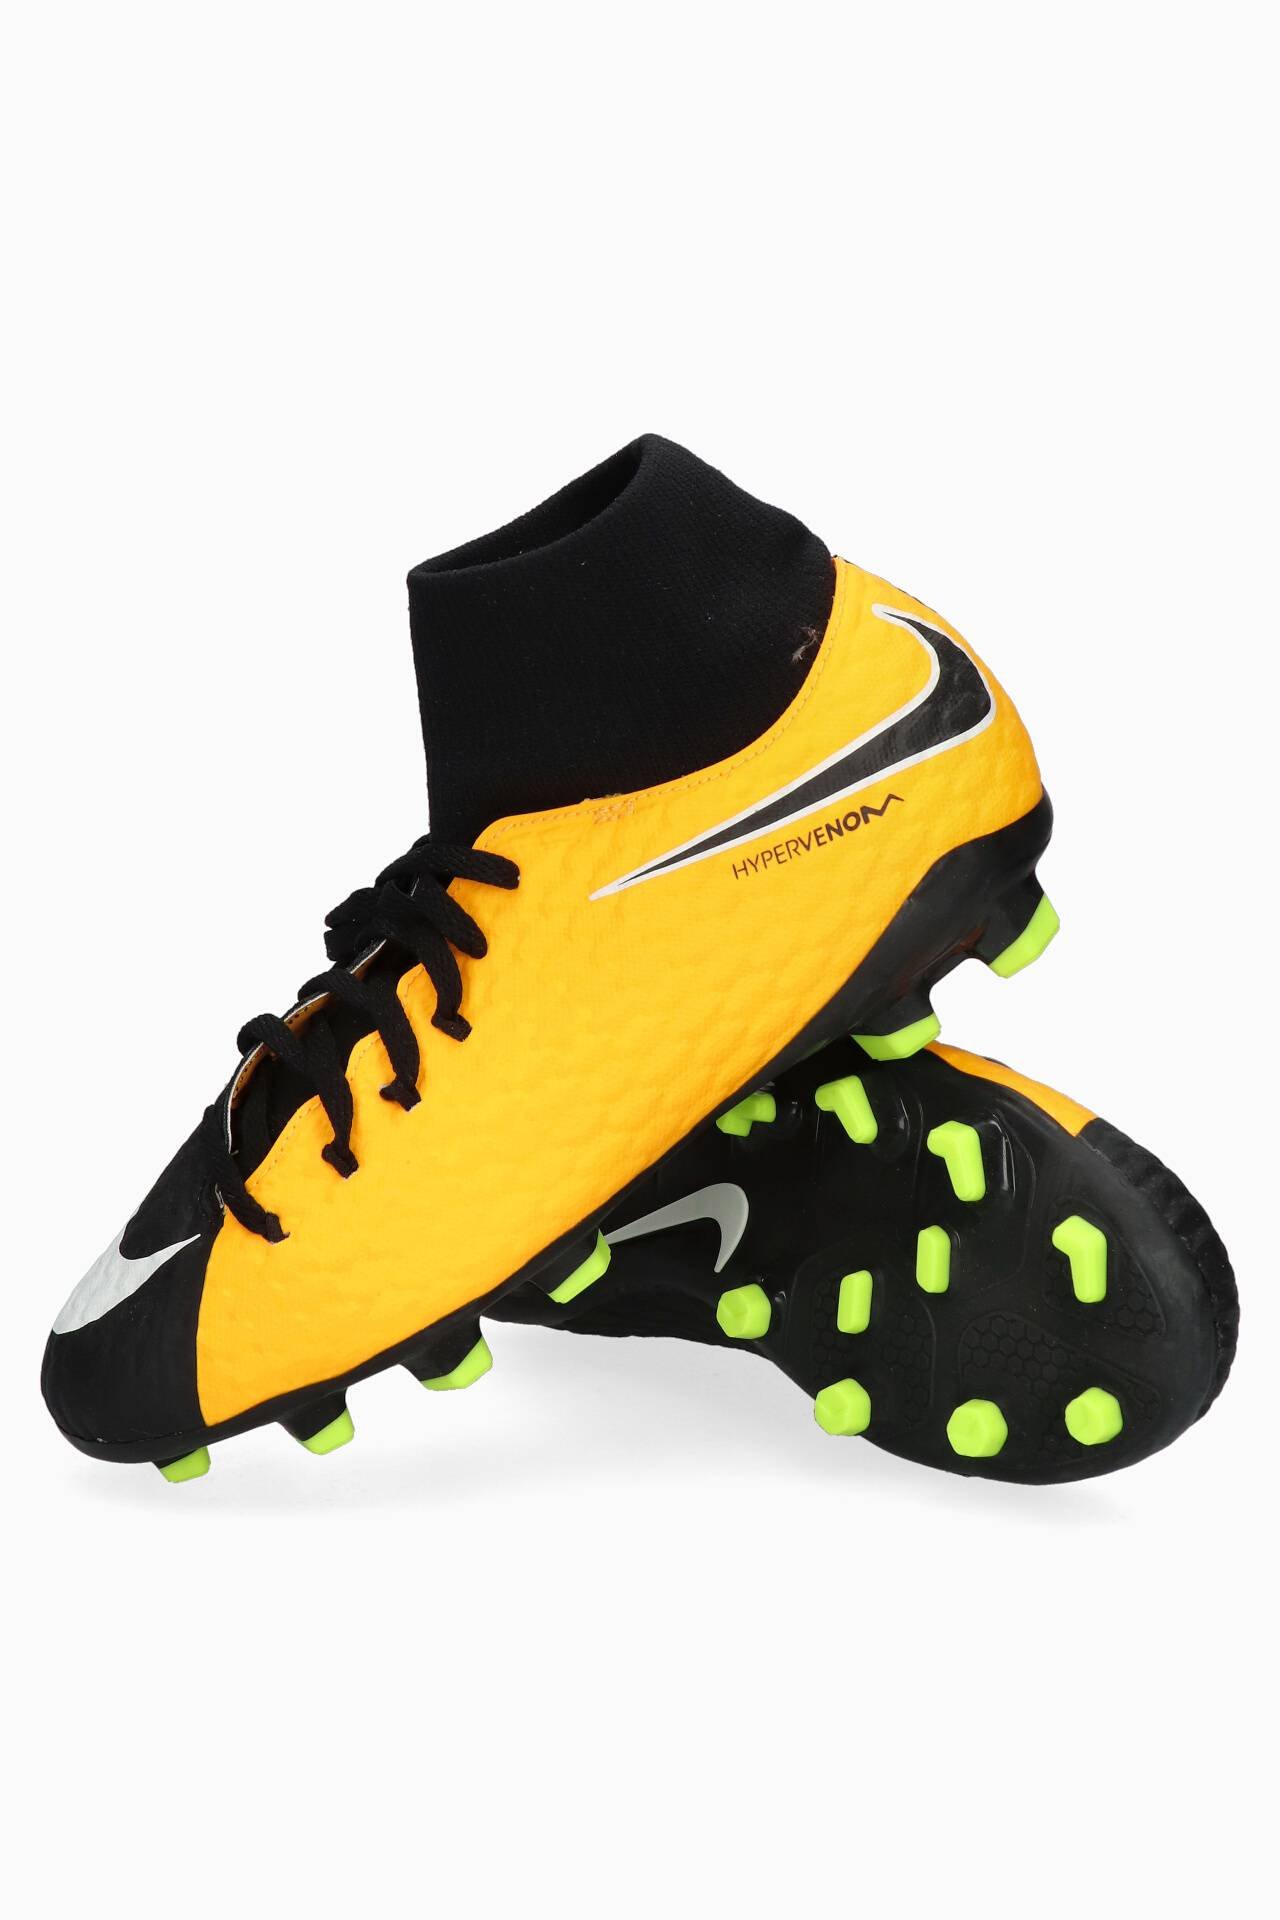 Nike Hypervenom Phelon III DF FG Junior - Football boots equipment